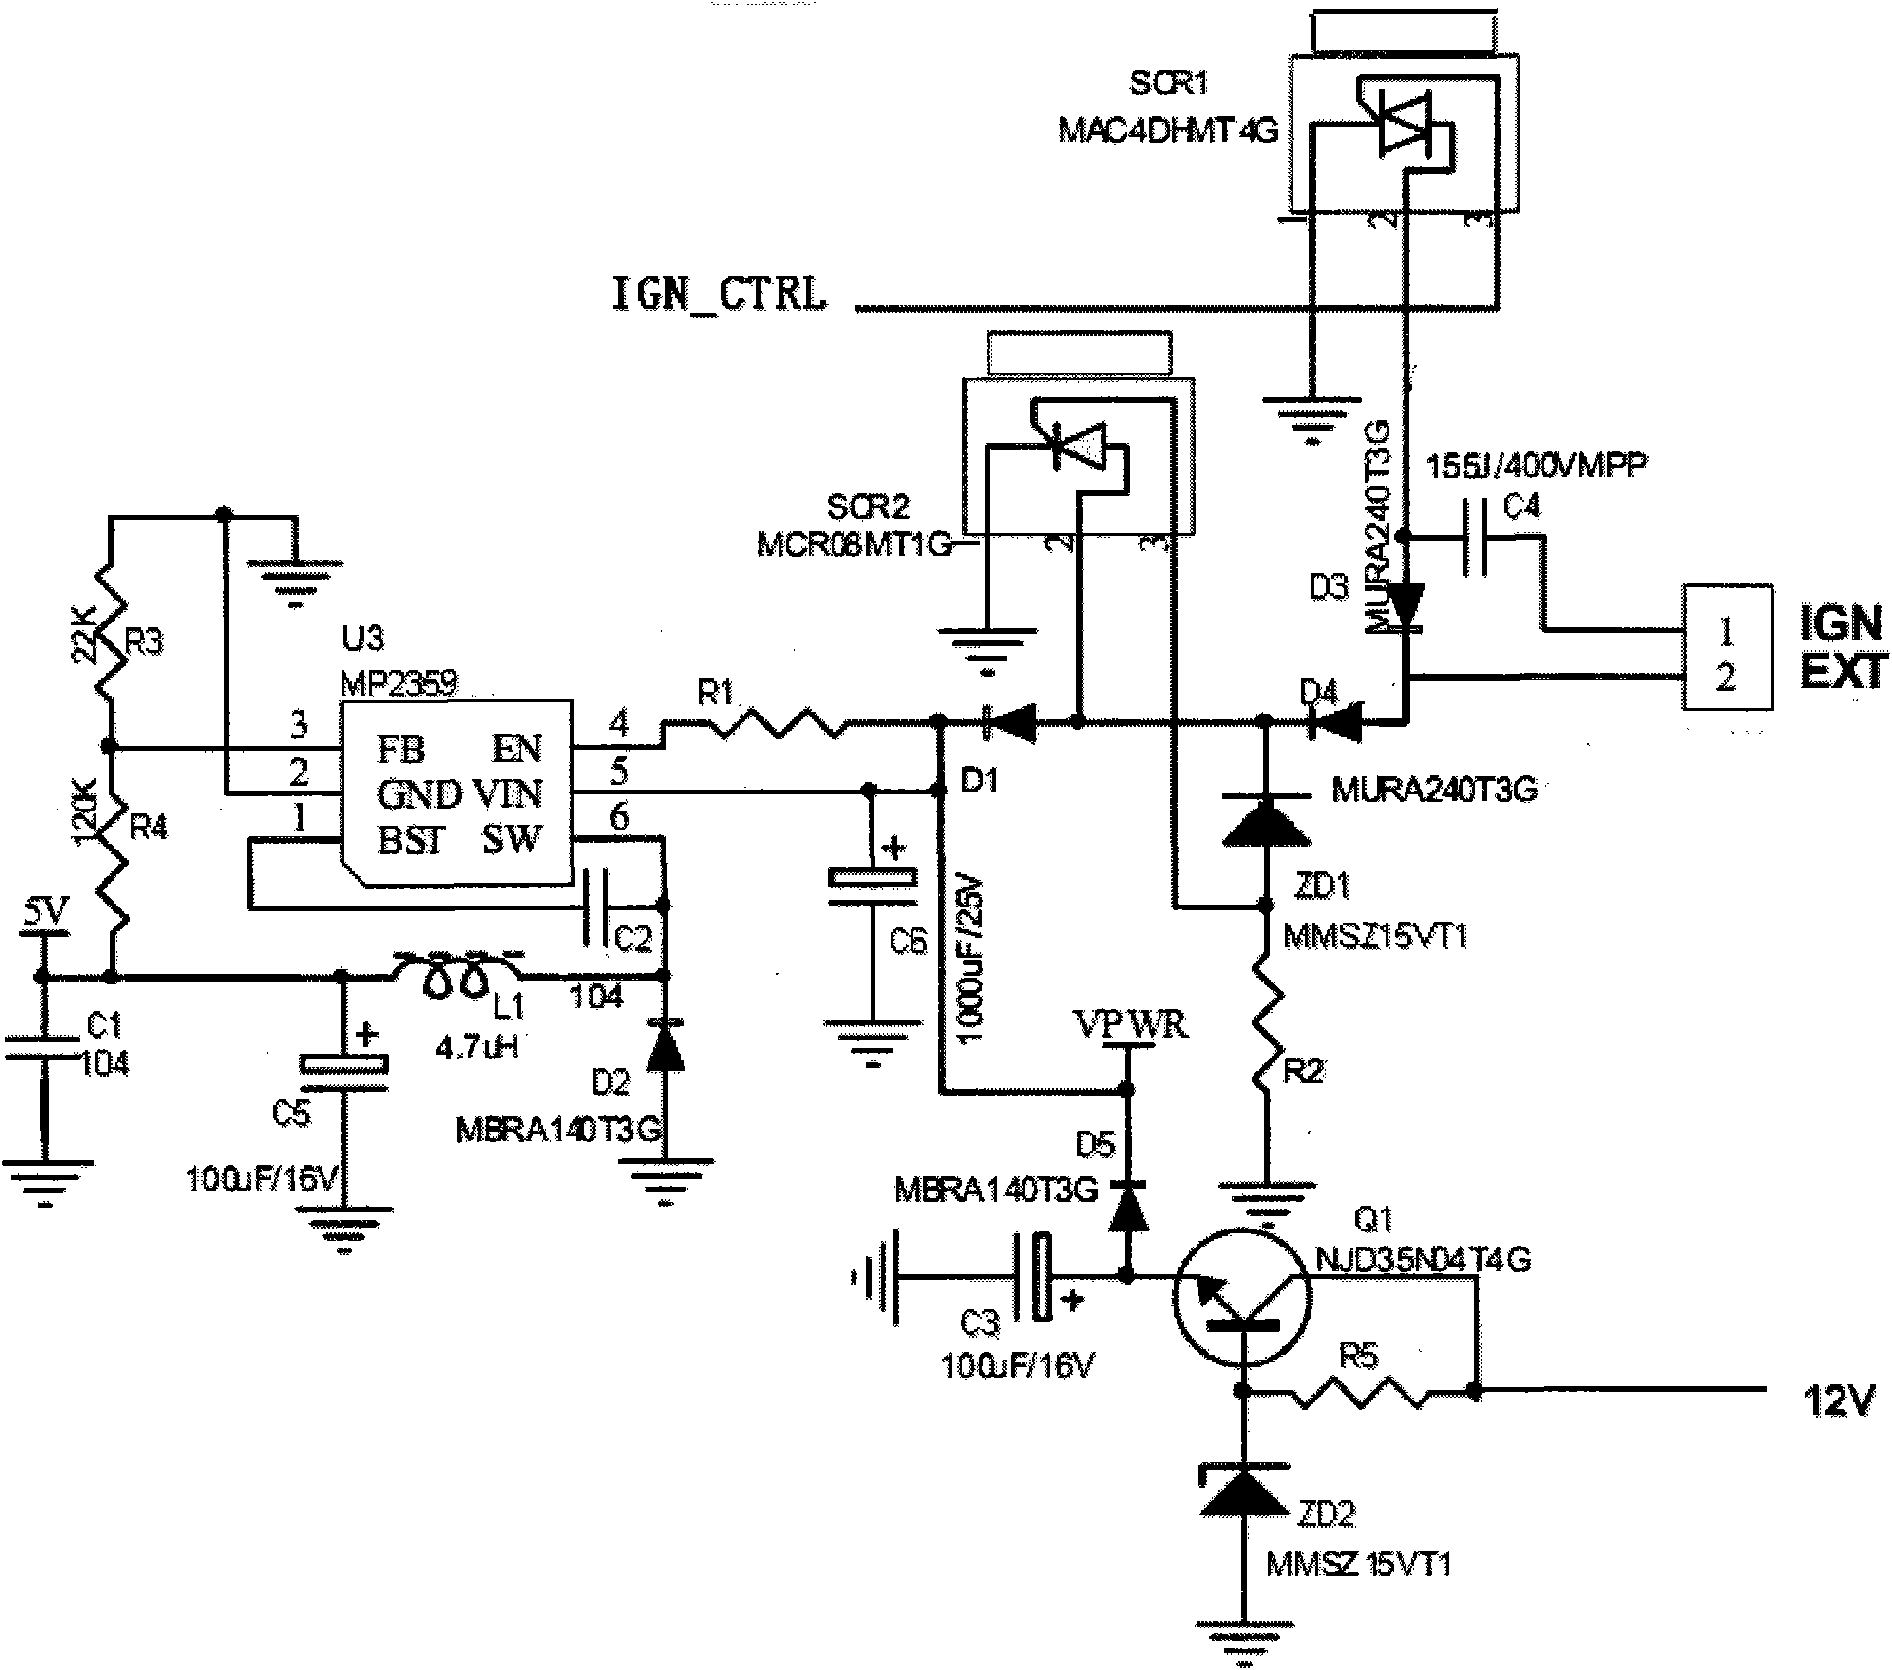 Dual-mode power supply circuit of digital igniter